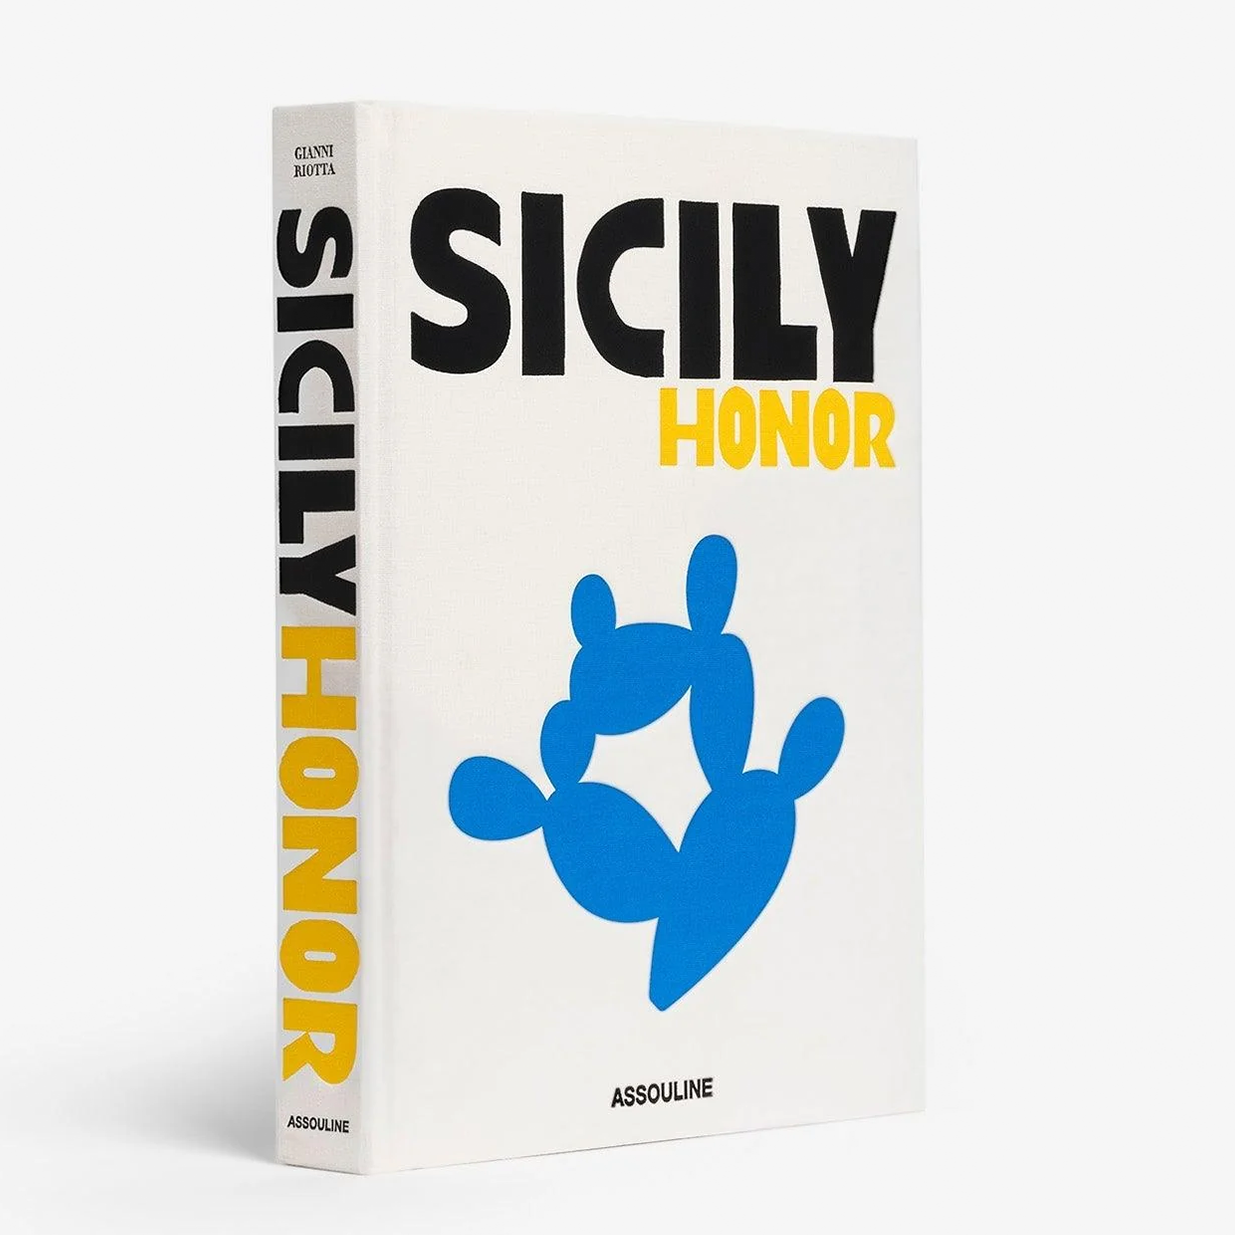 "Sicily Honor" Book